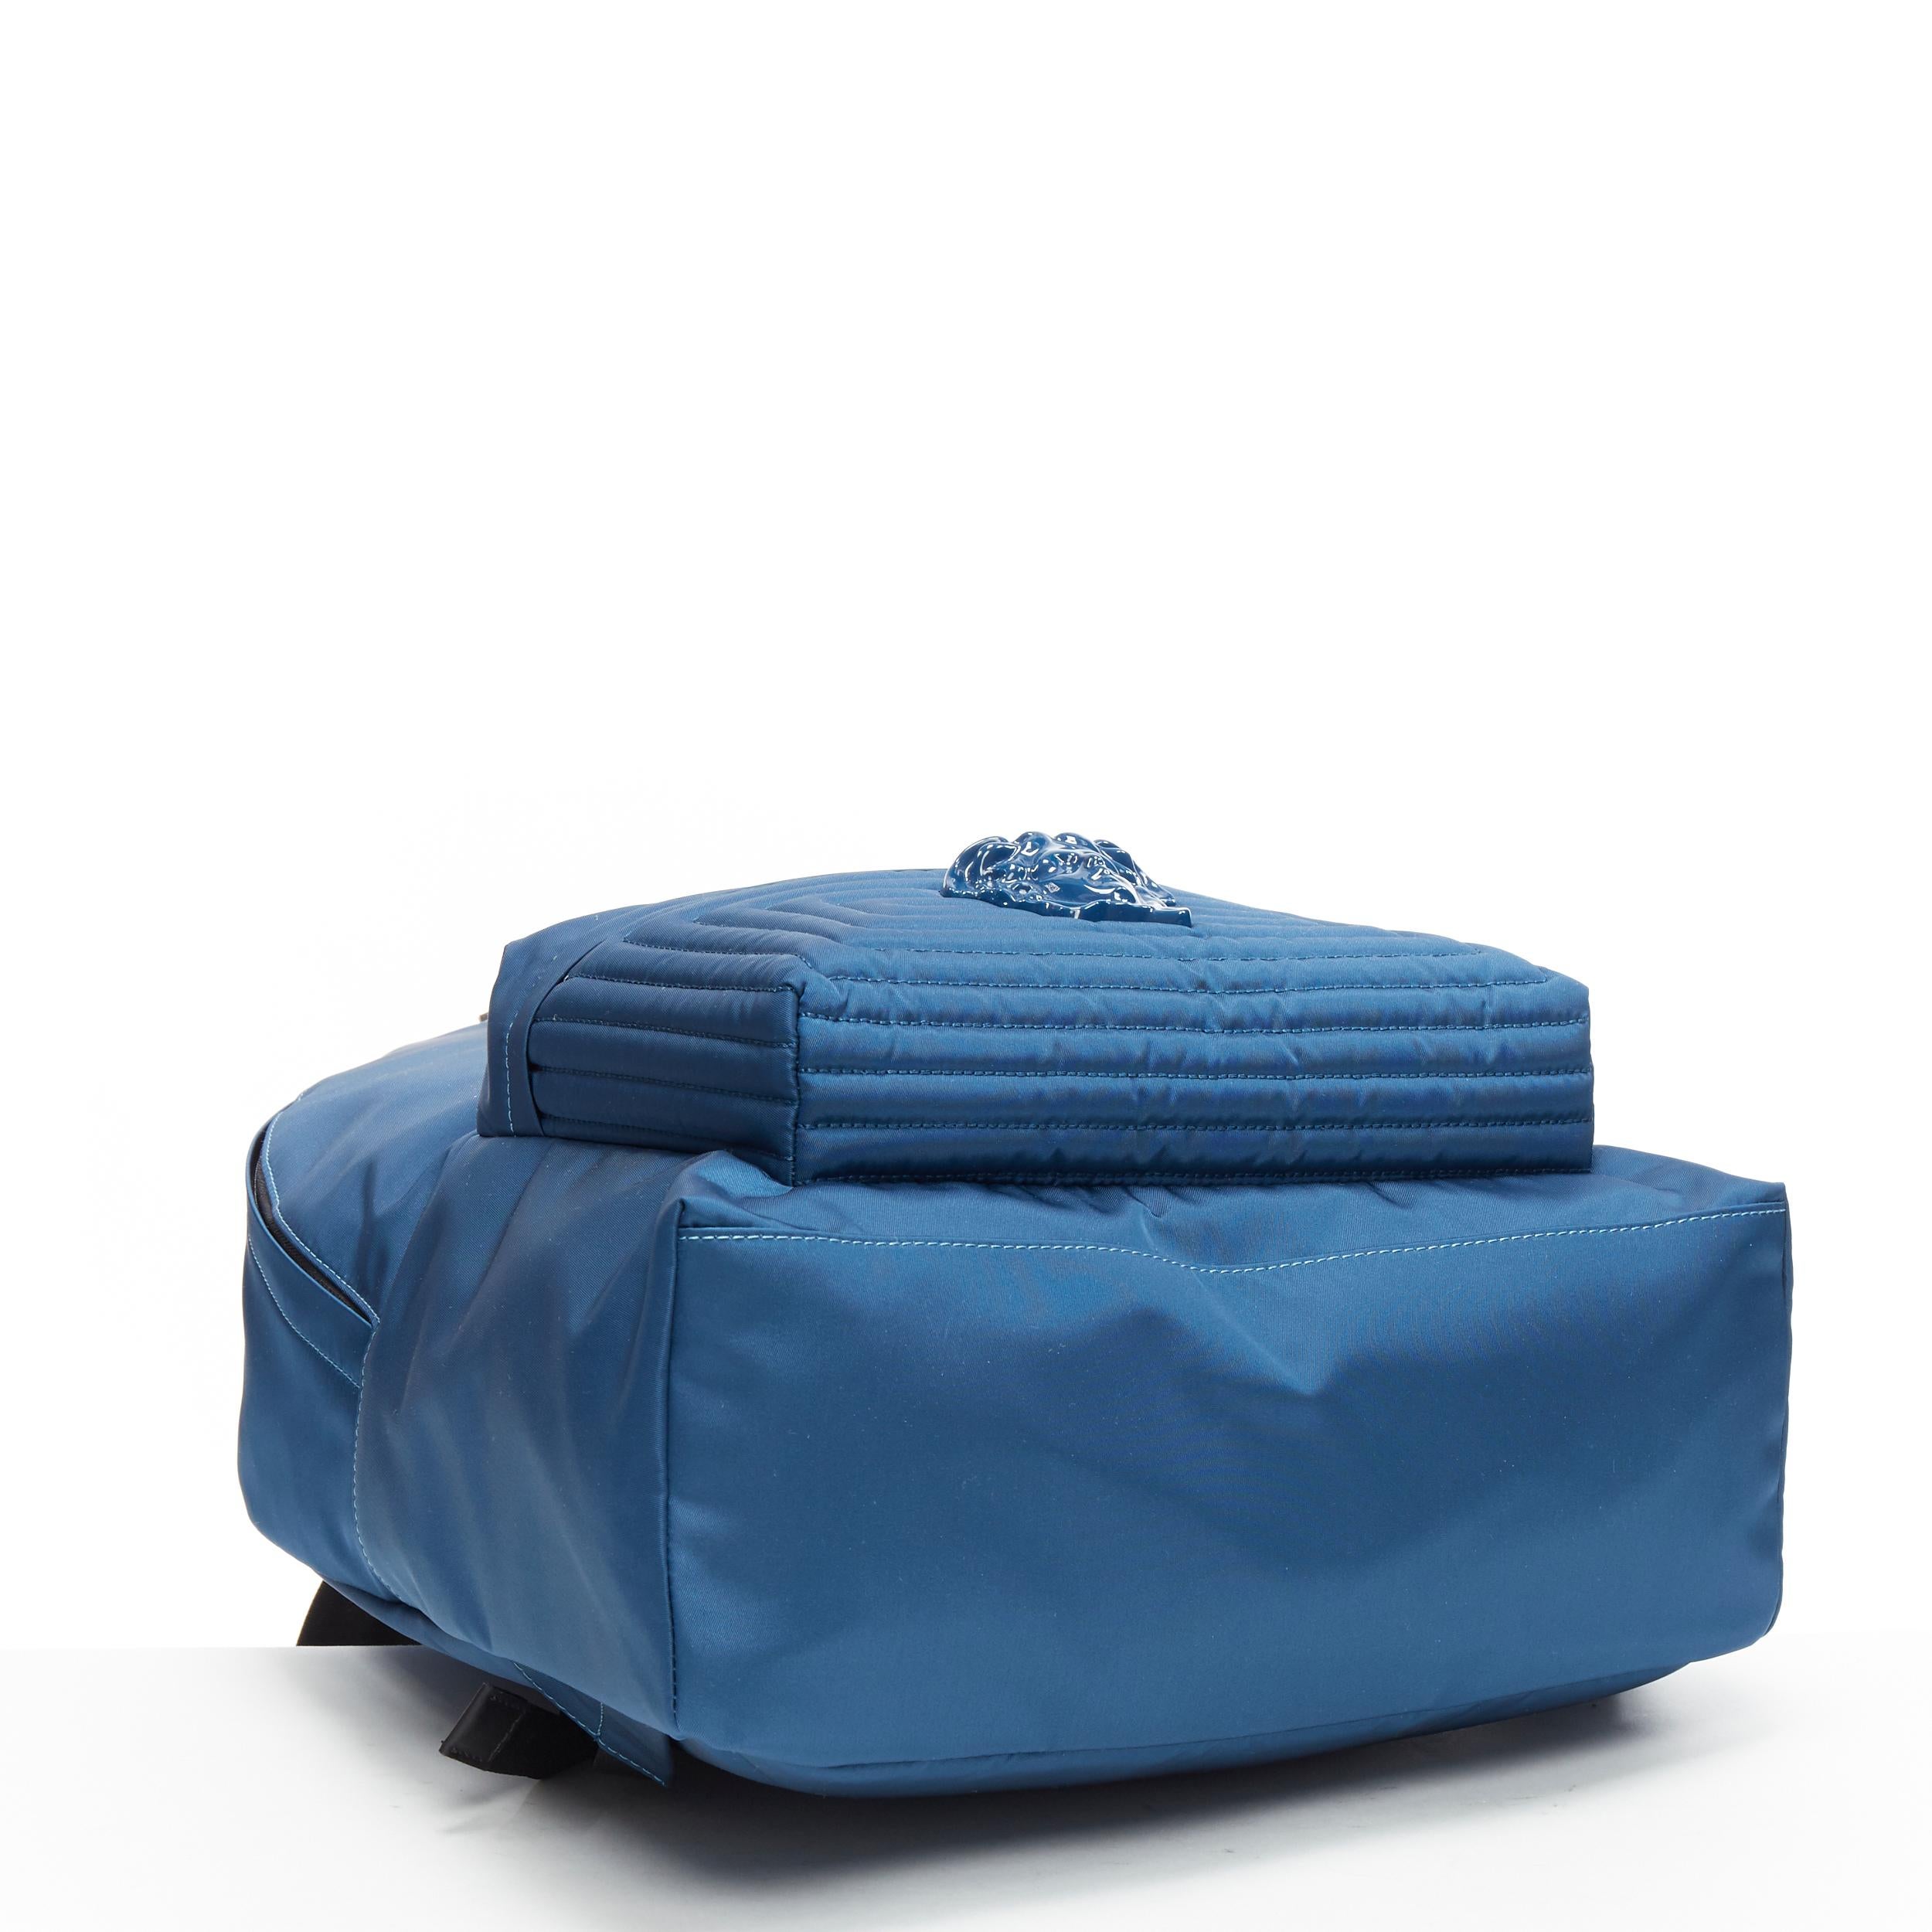 new VERSACE Palazzo Medusa navy blue nylon Greca pocket backpack bag 1